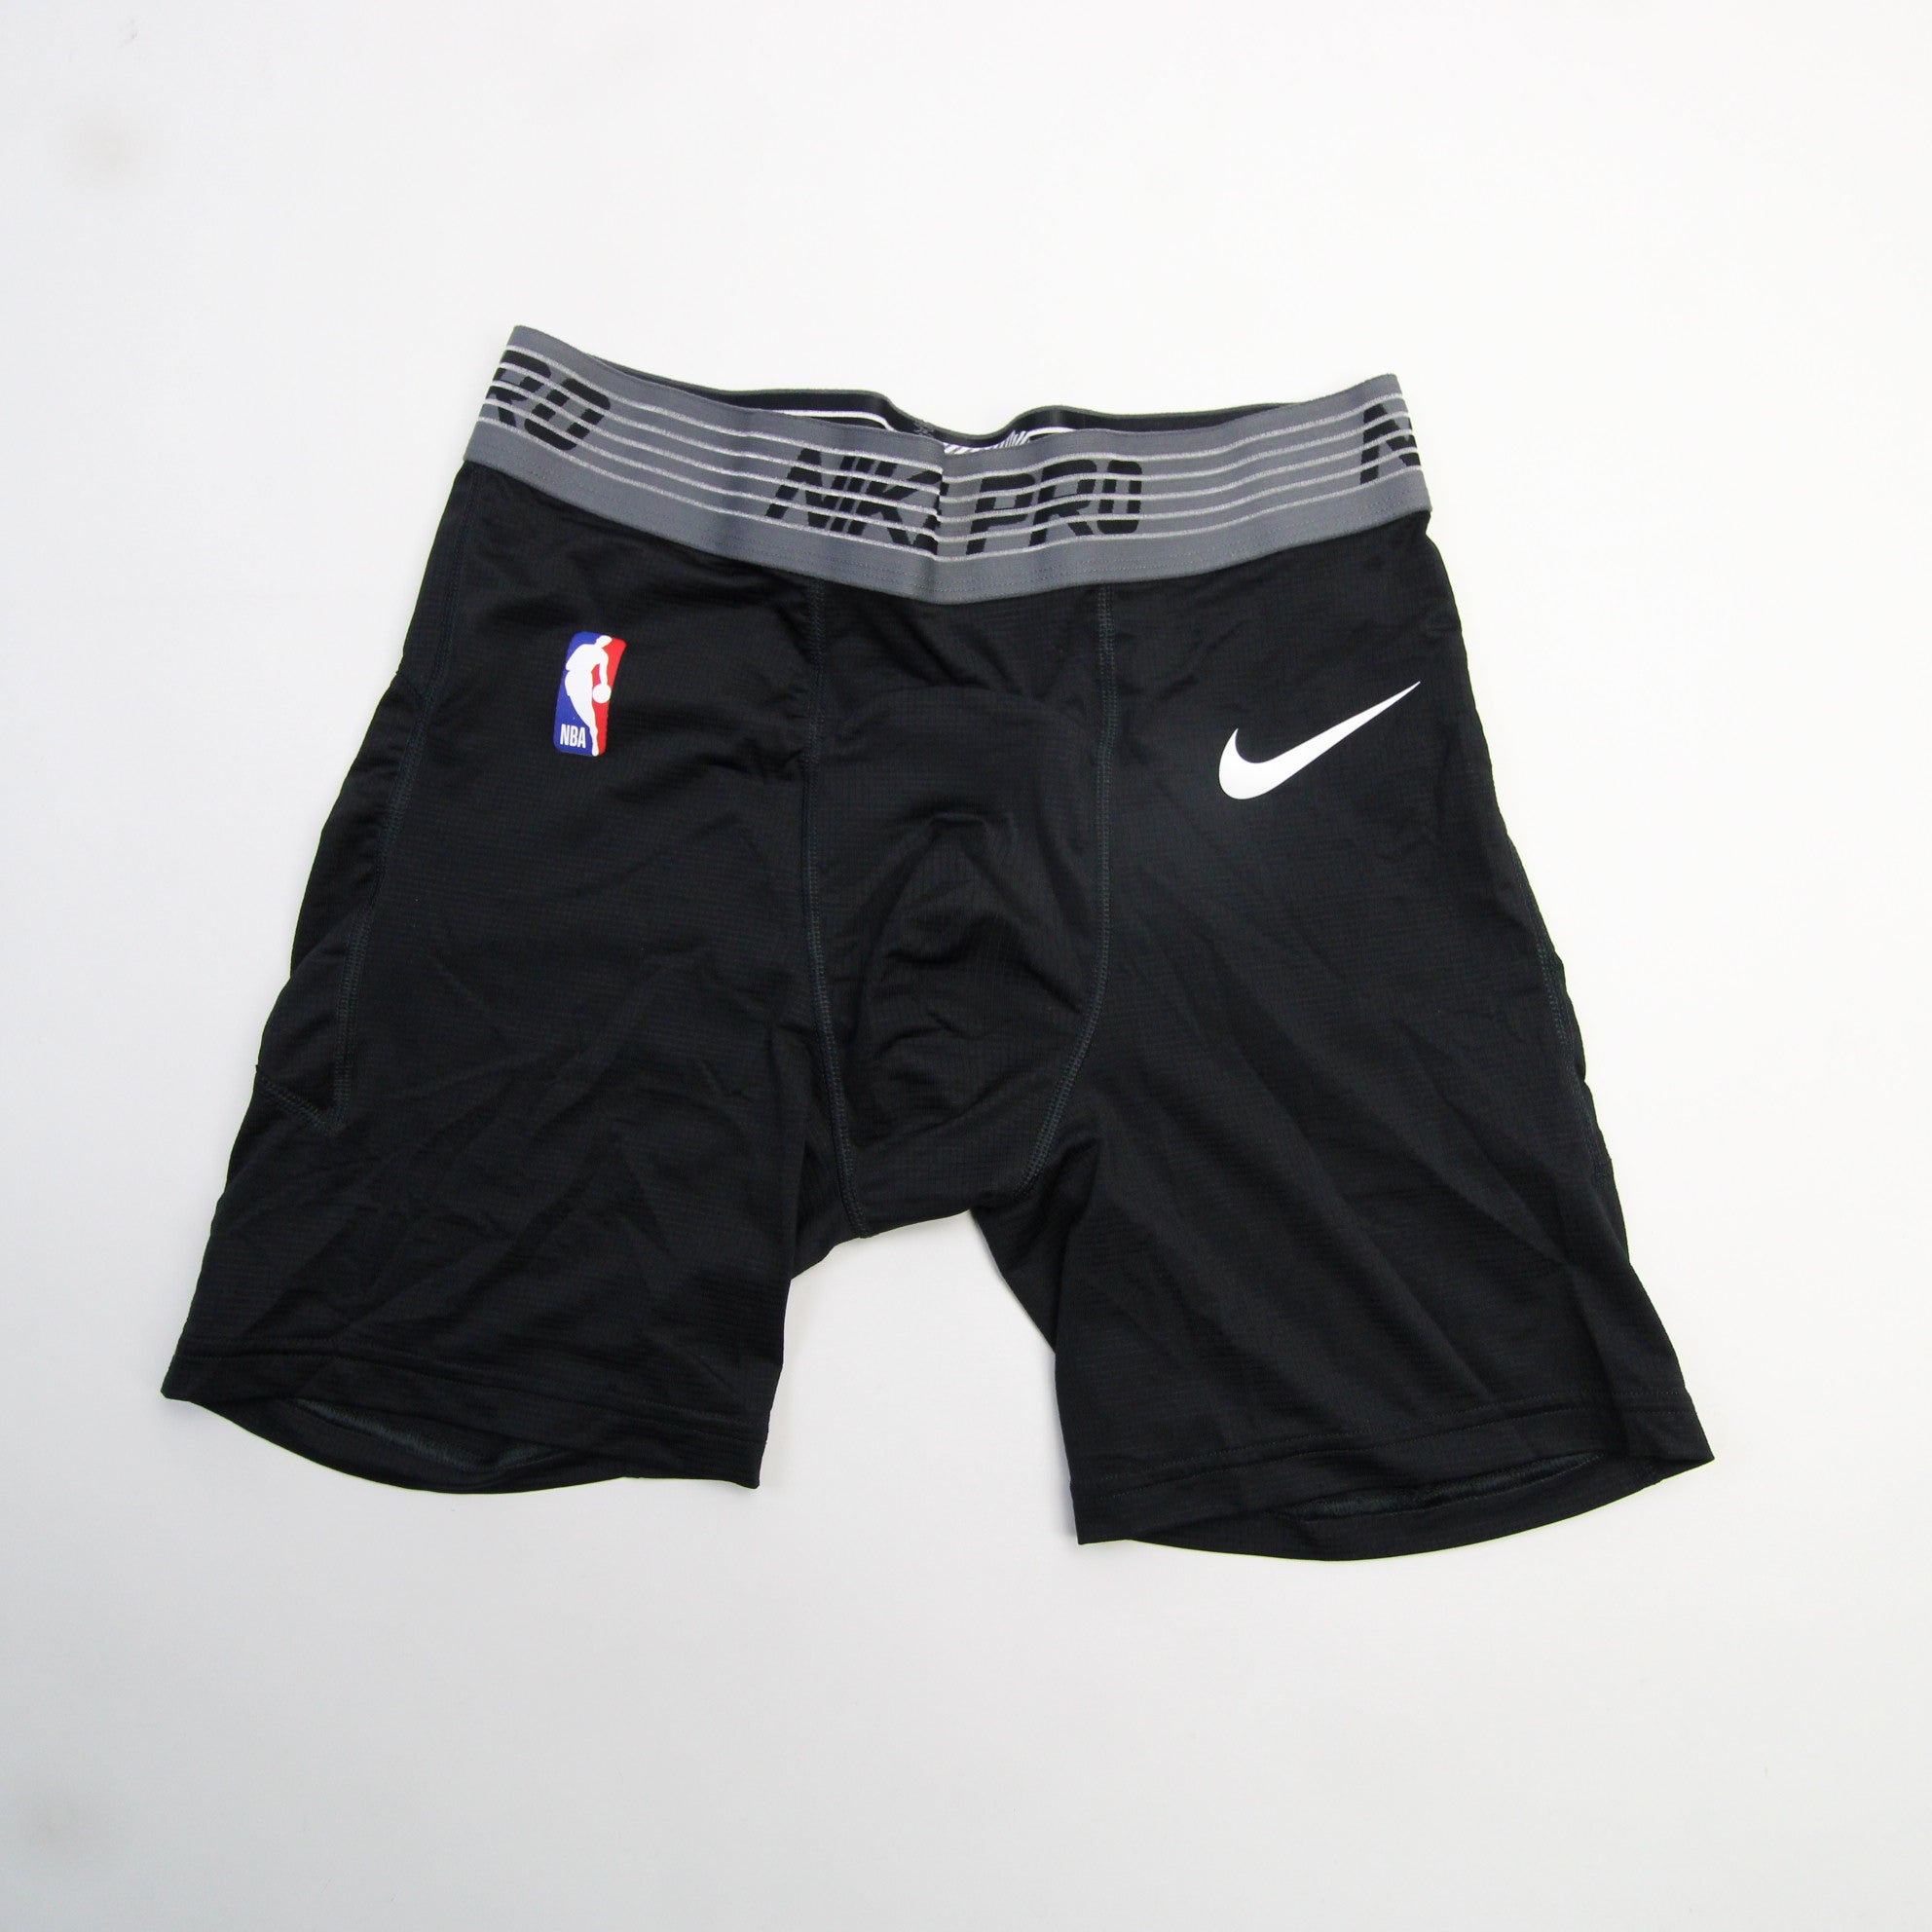 Nike NBA Authentics Compression Shorts Men's Black Used